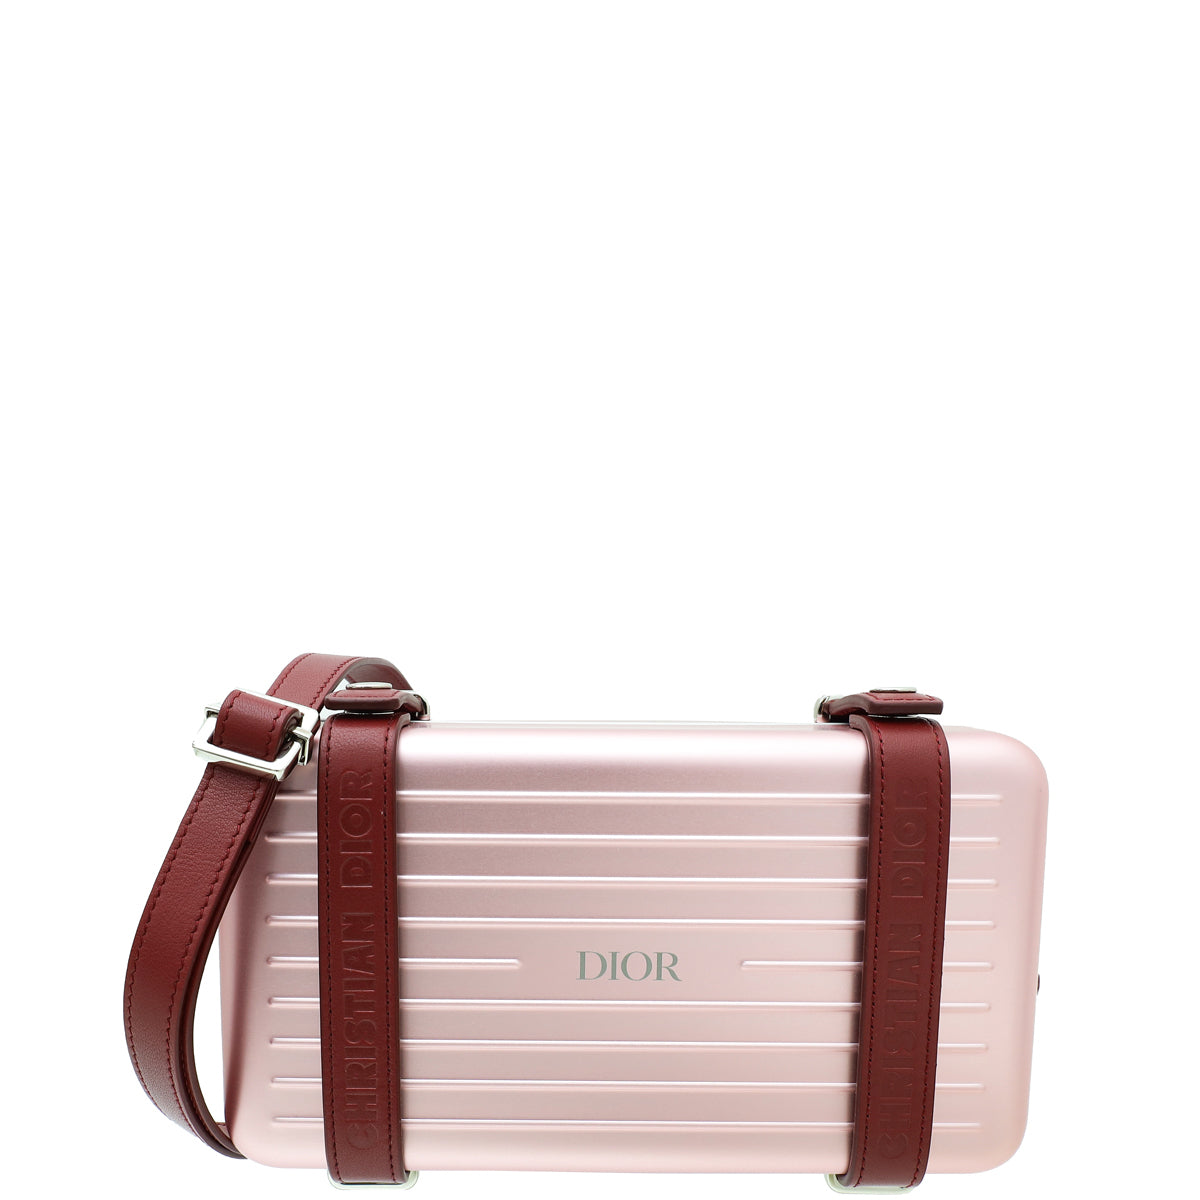 Christian Dior Bicolor x Rimowa Personal Clutch Crossbody Bag